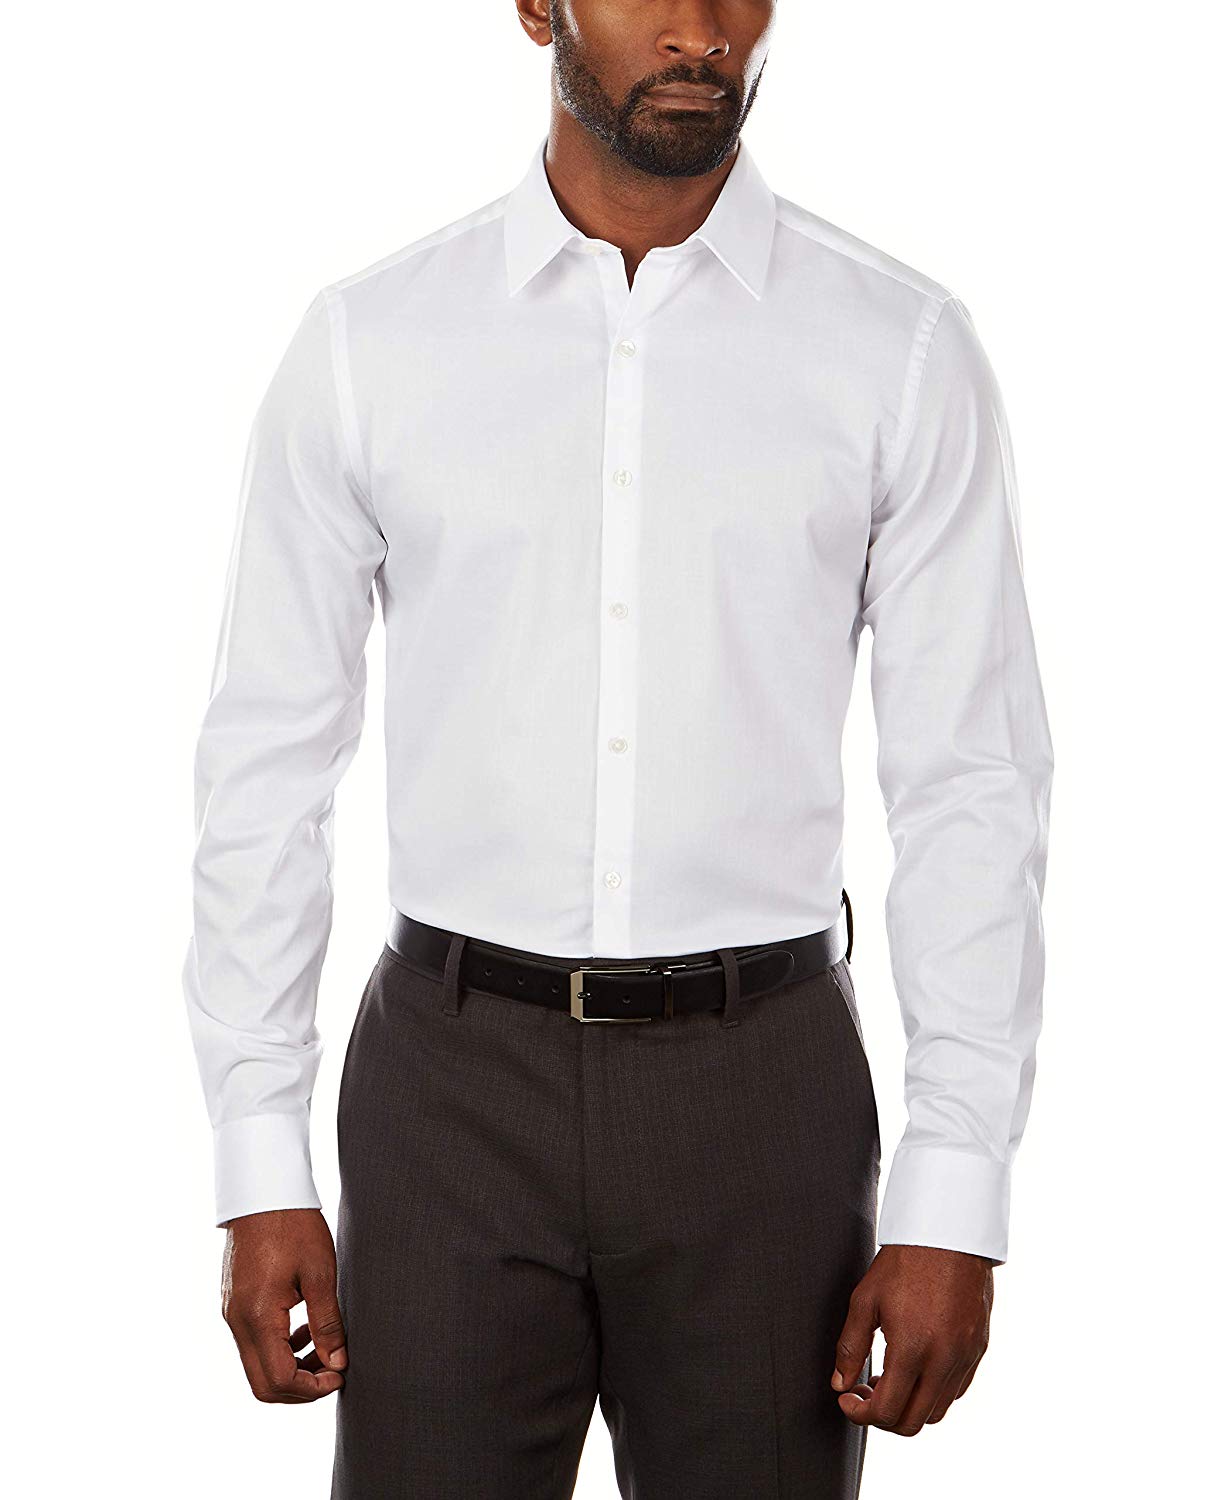 Van Heusen Men's Dress Shirt Slim Fit Flex Collar Stretch, White, Size